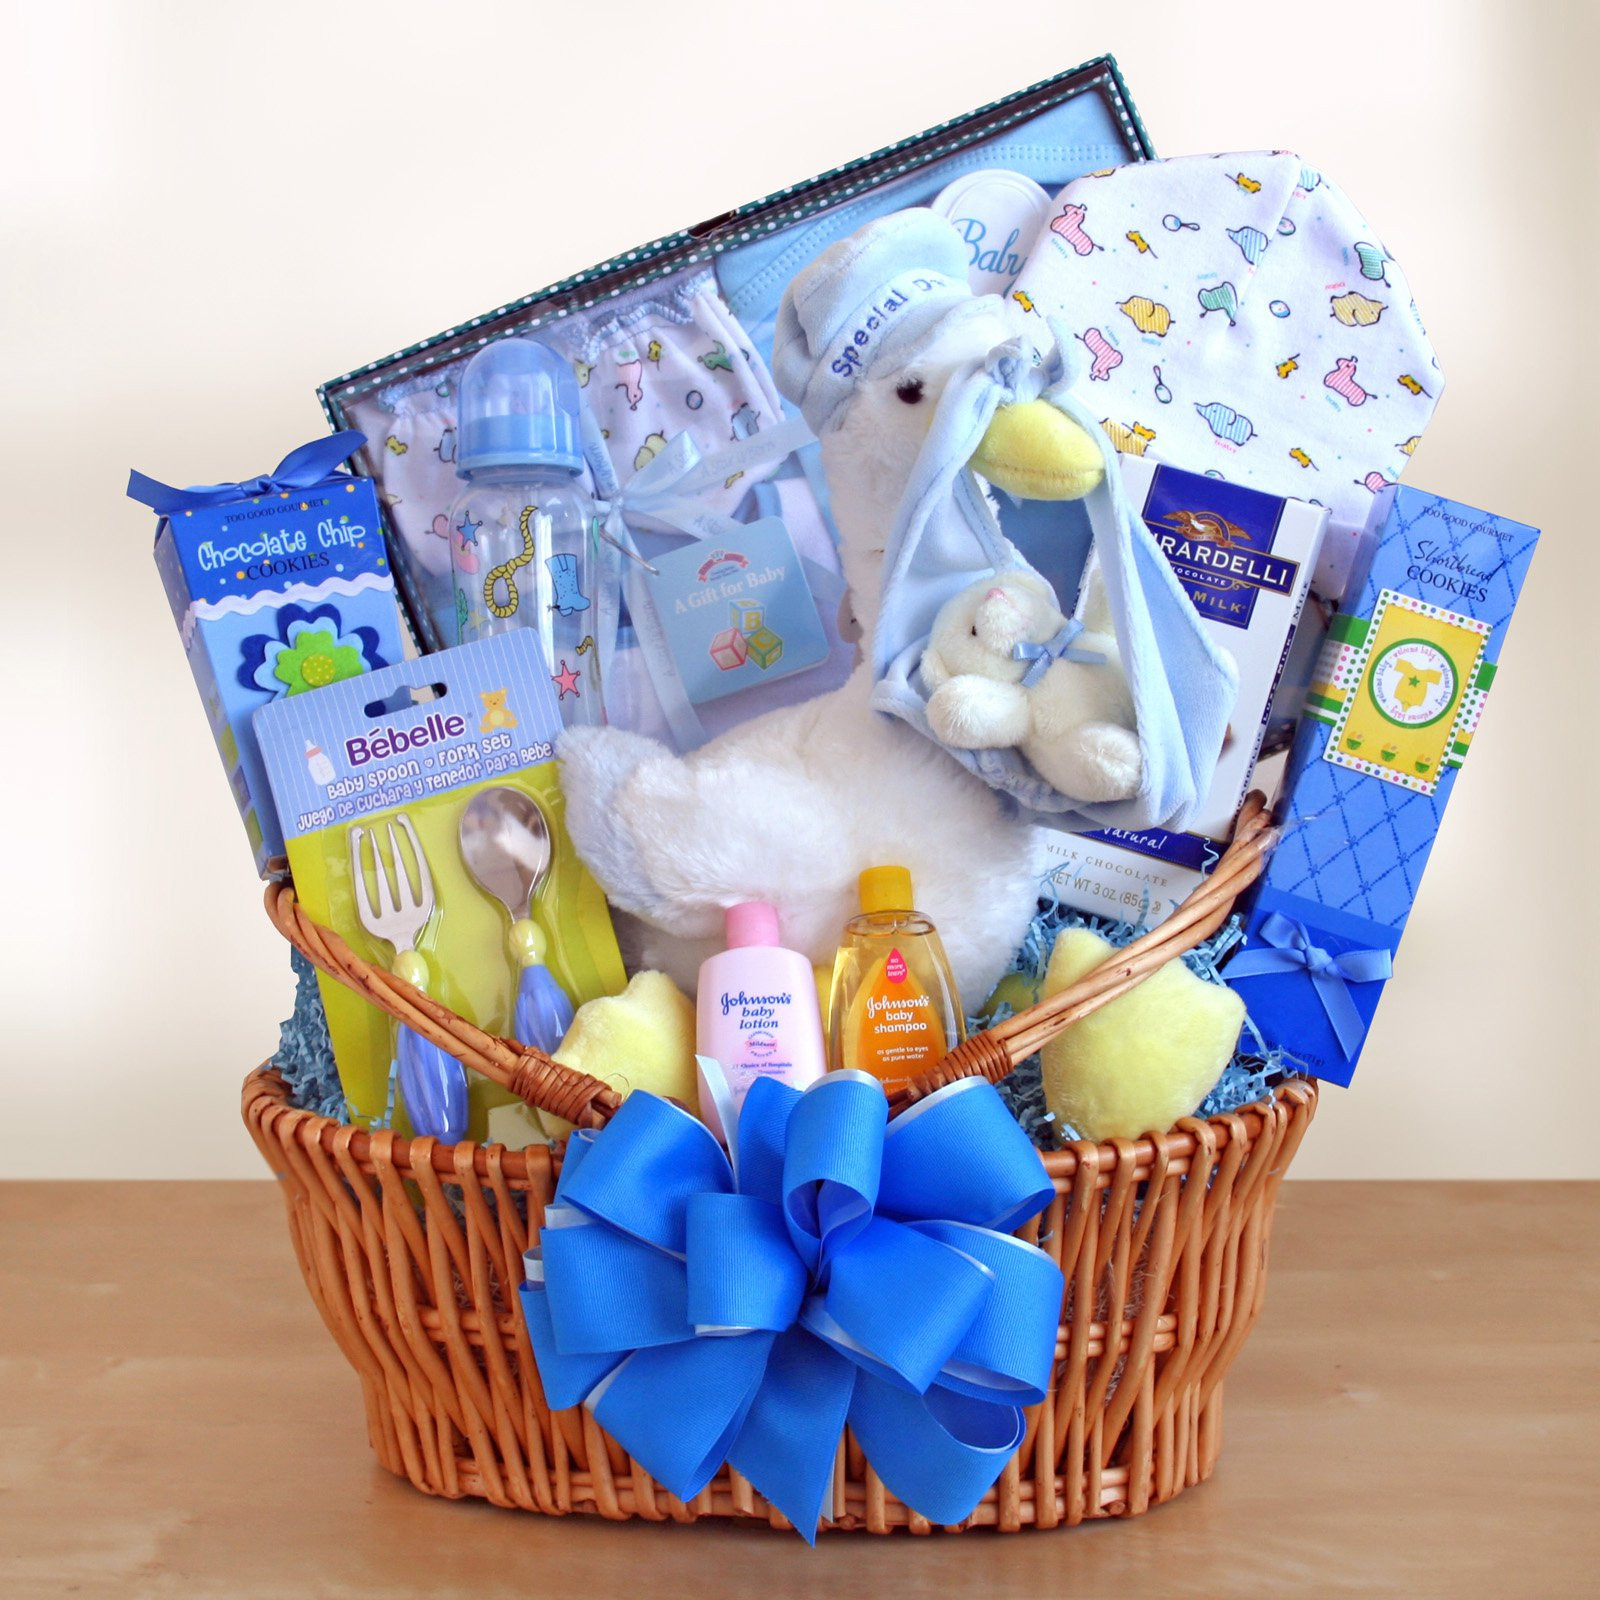 Baby Boy Shower Gift Ideas
 Special Stork Delivery Baby Boy Gift Basket Gift Baskets